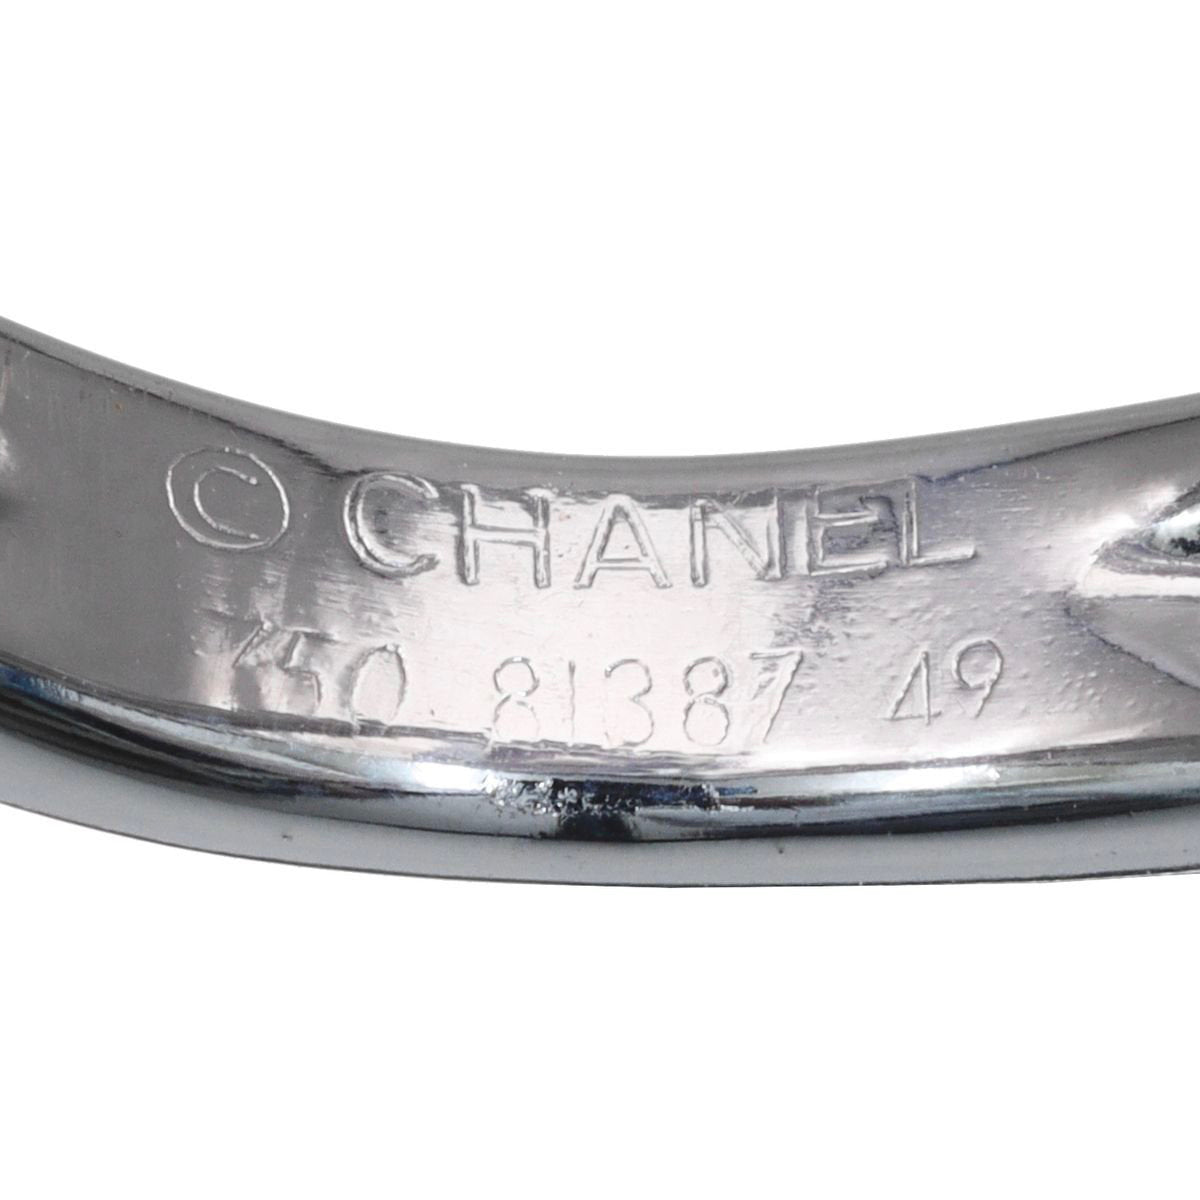 Chanel chalcedony ring